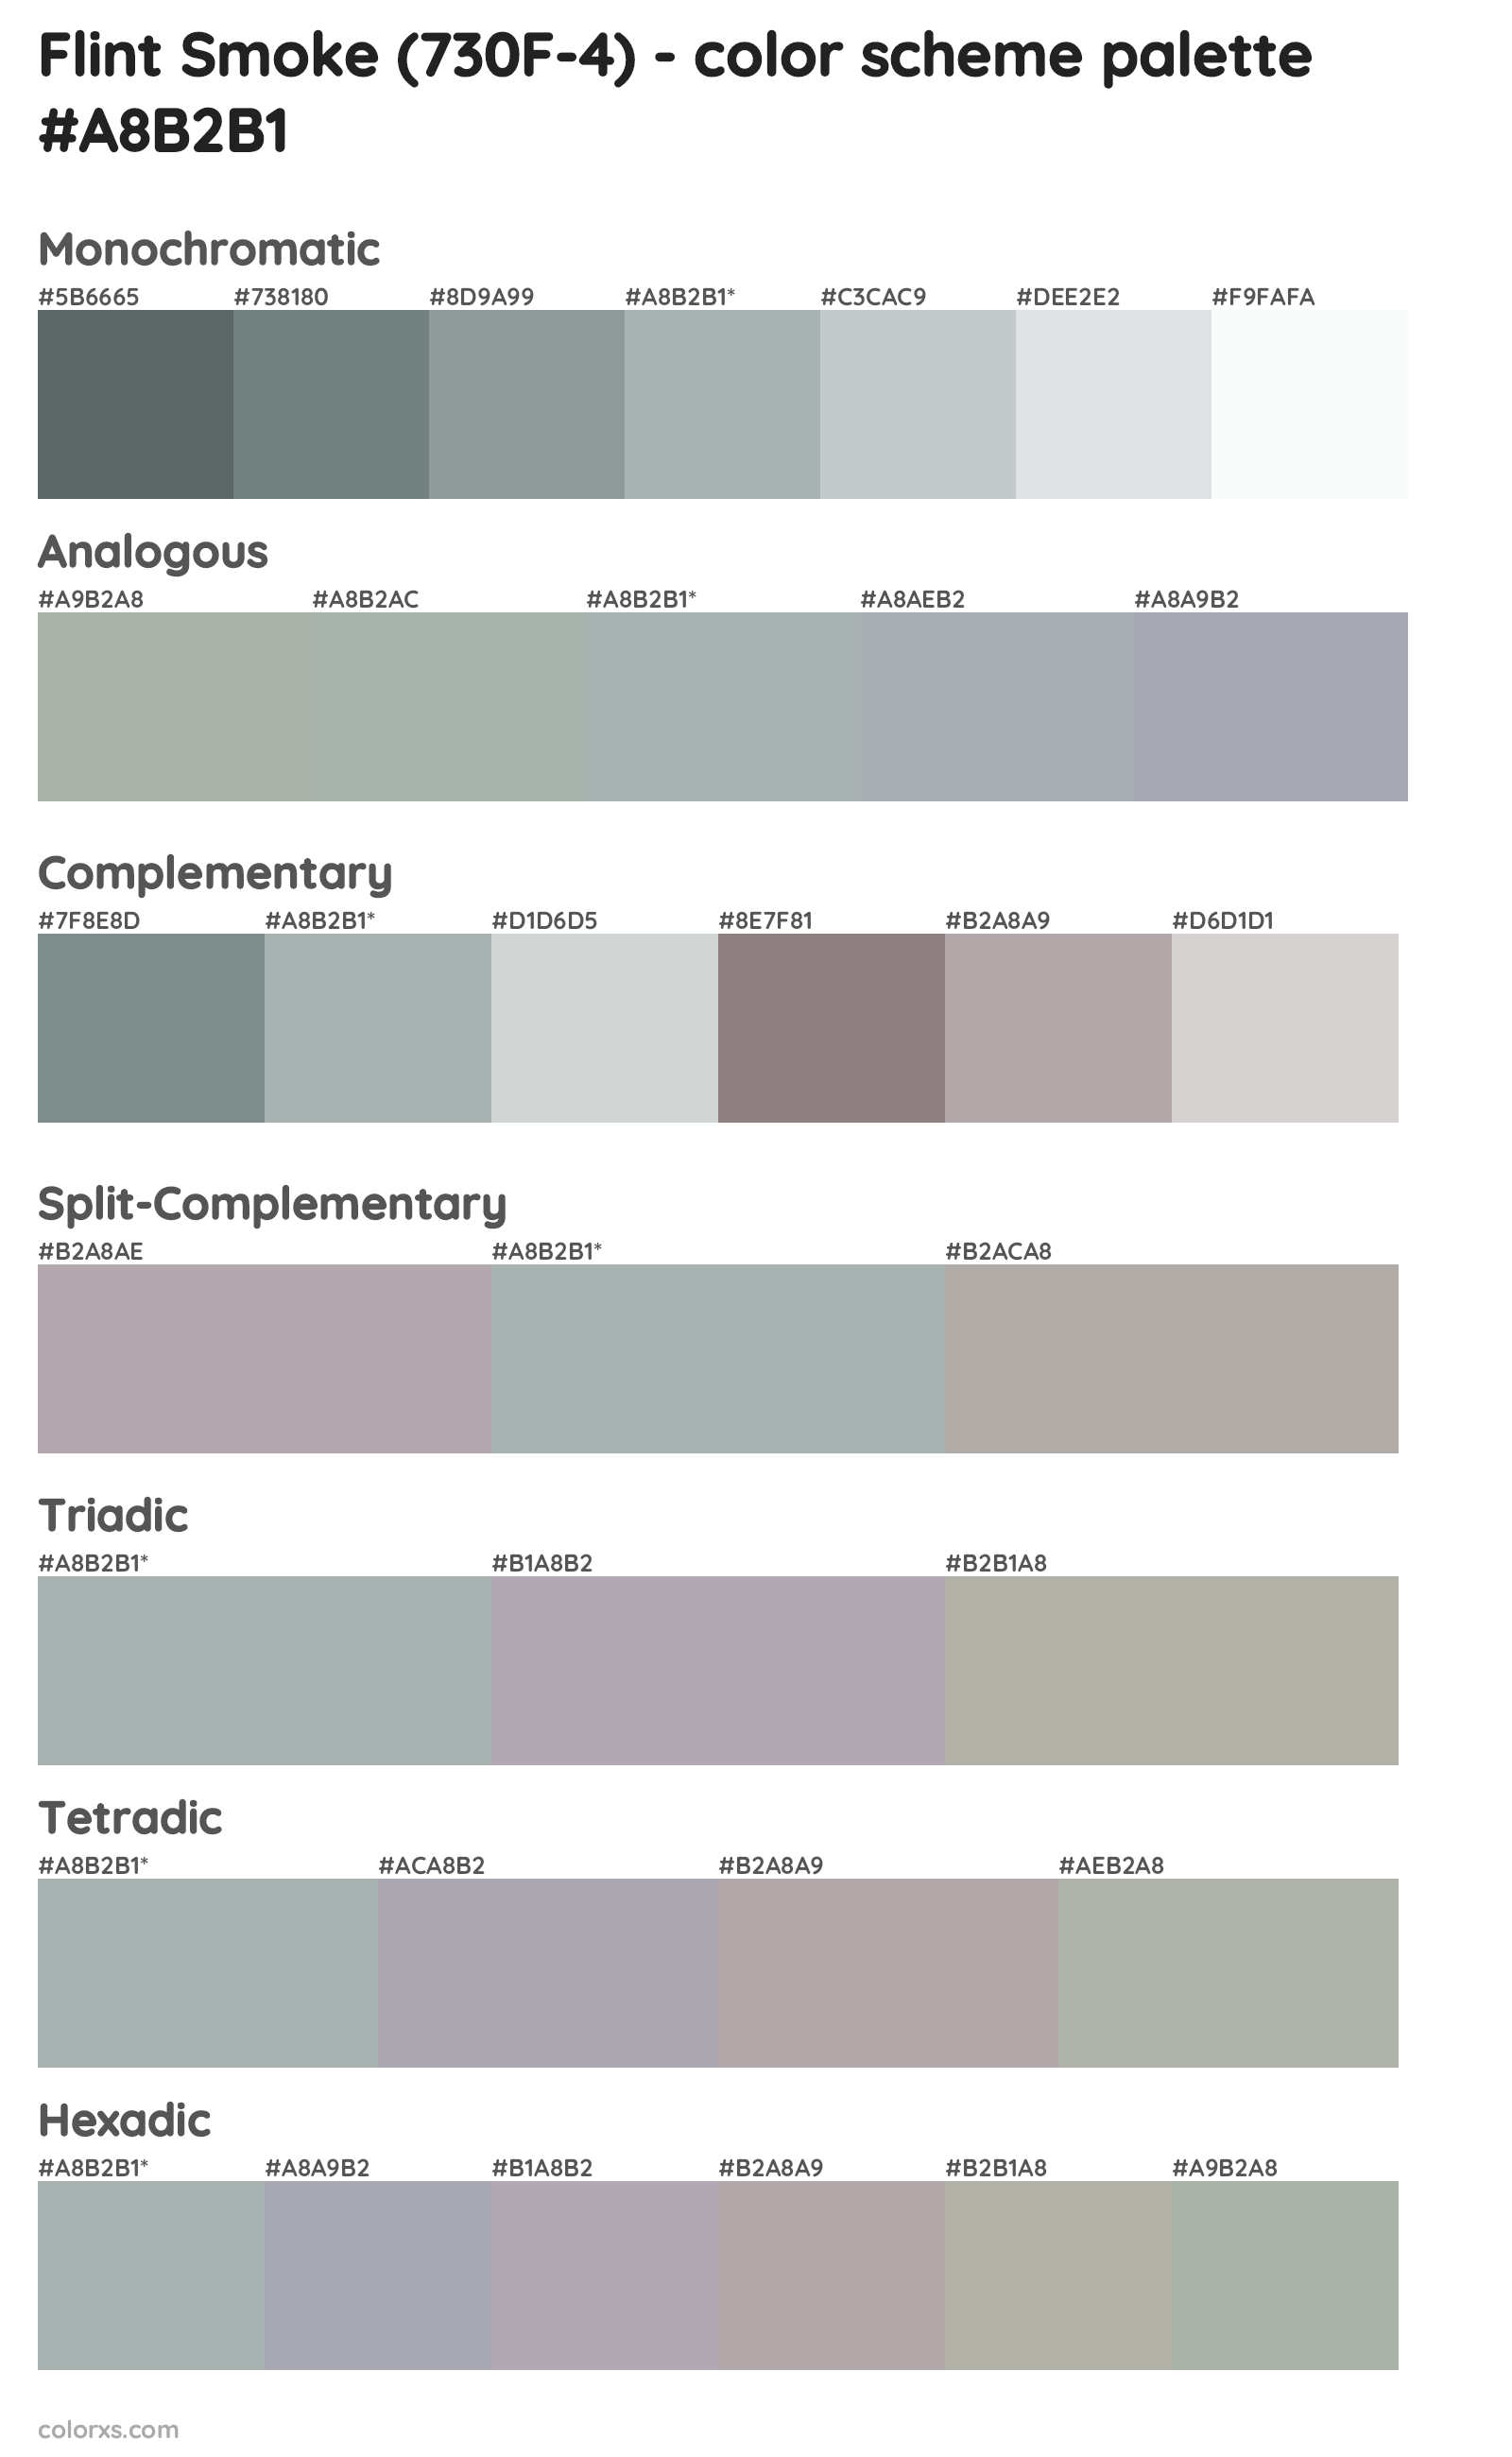 Flint Smoke (730F-4) Color Scheme Palettes